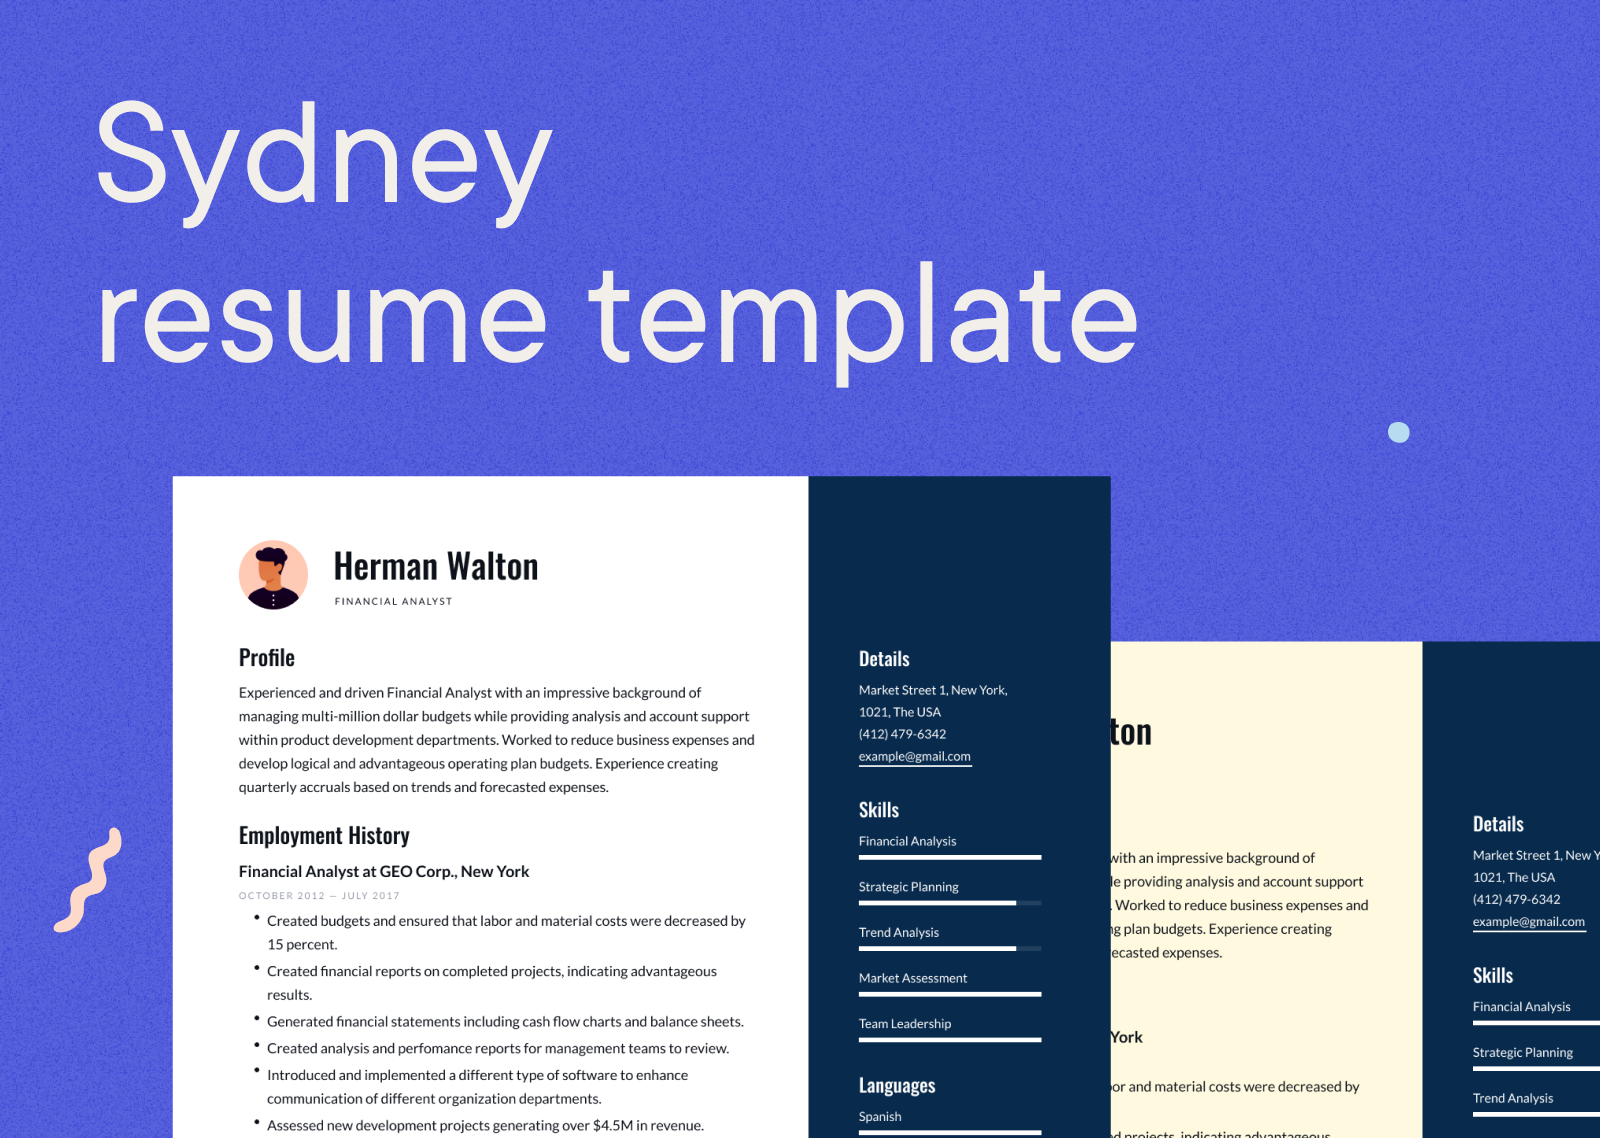 Blogs - Sydney resume template